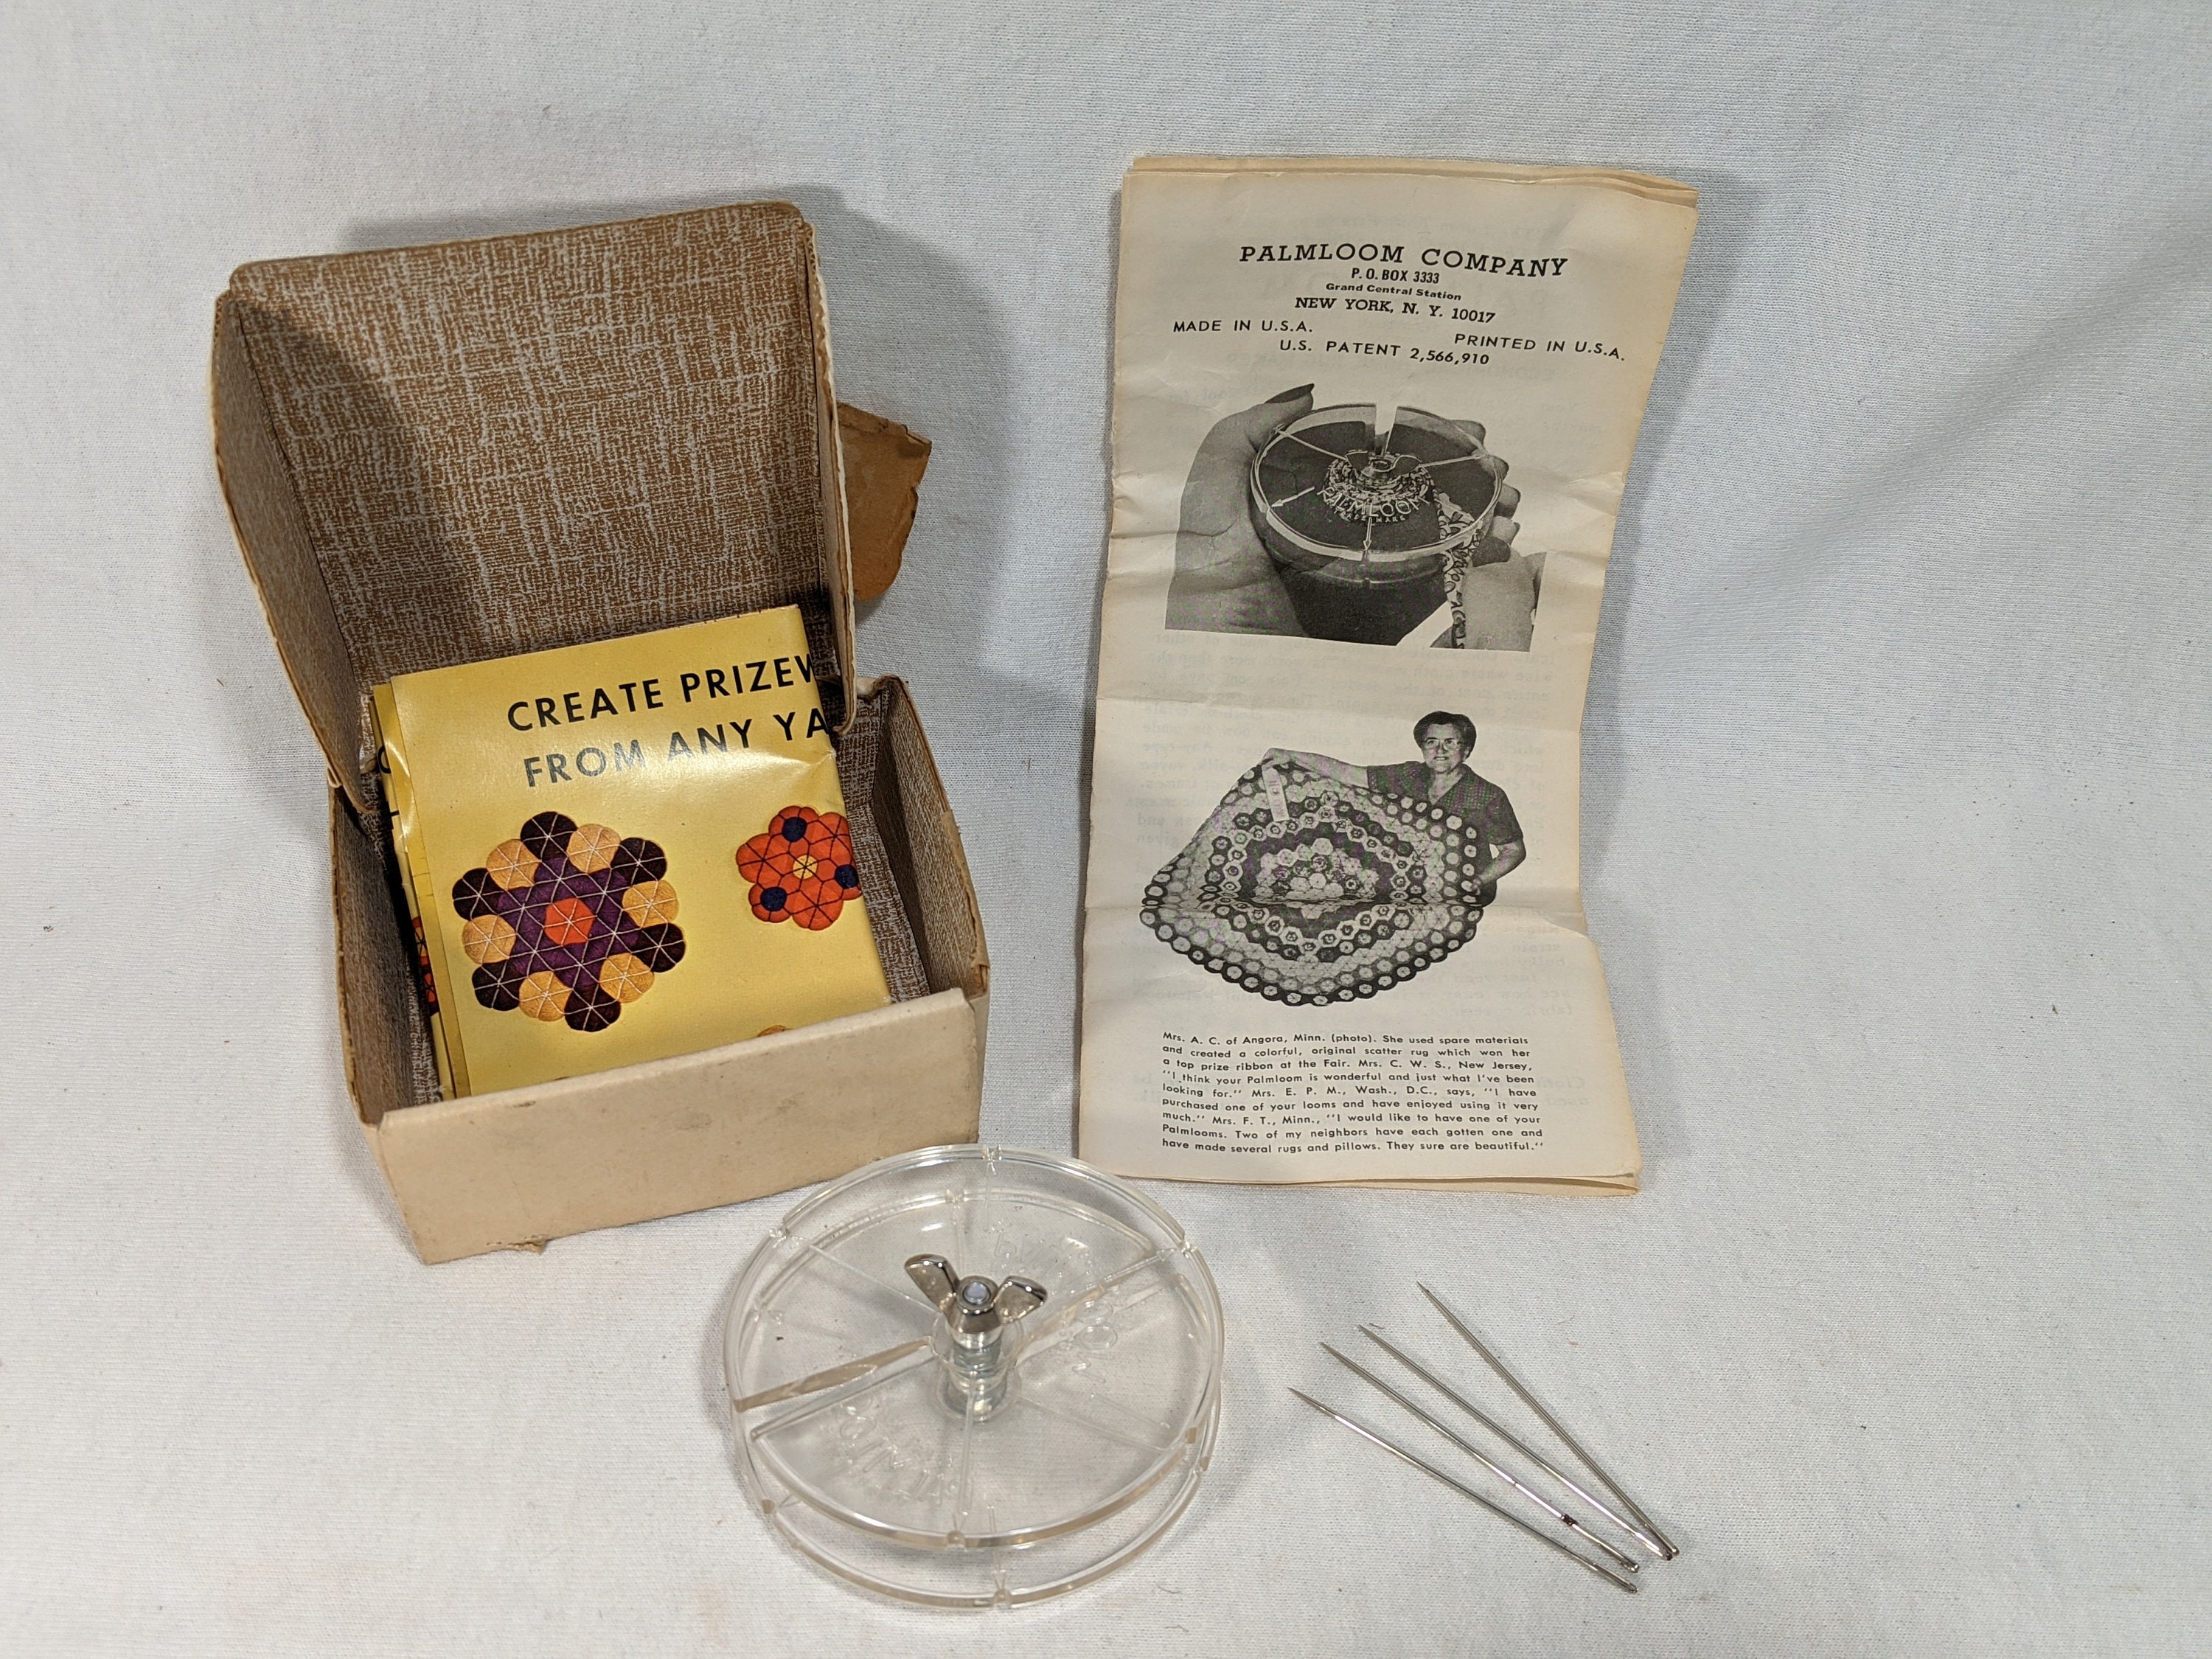 Wooden Bead Loom Kit Extra Wide, DIY Beaded Jewelry Making, Bead Weaving,  Includes Beads, Thread, Needles, UK Shop 